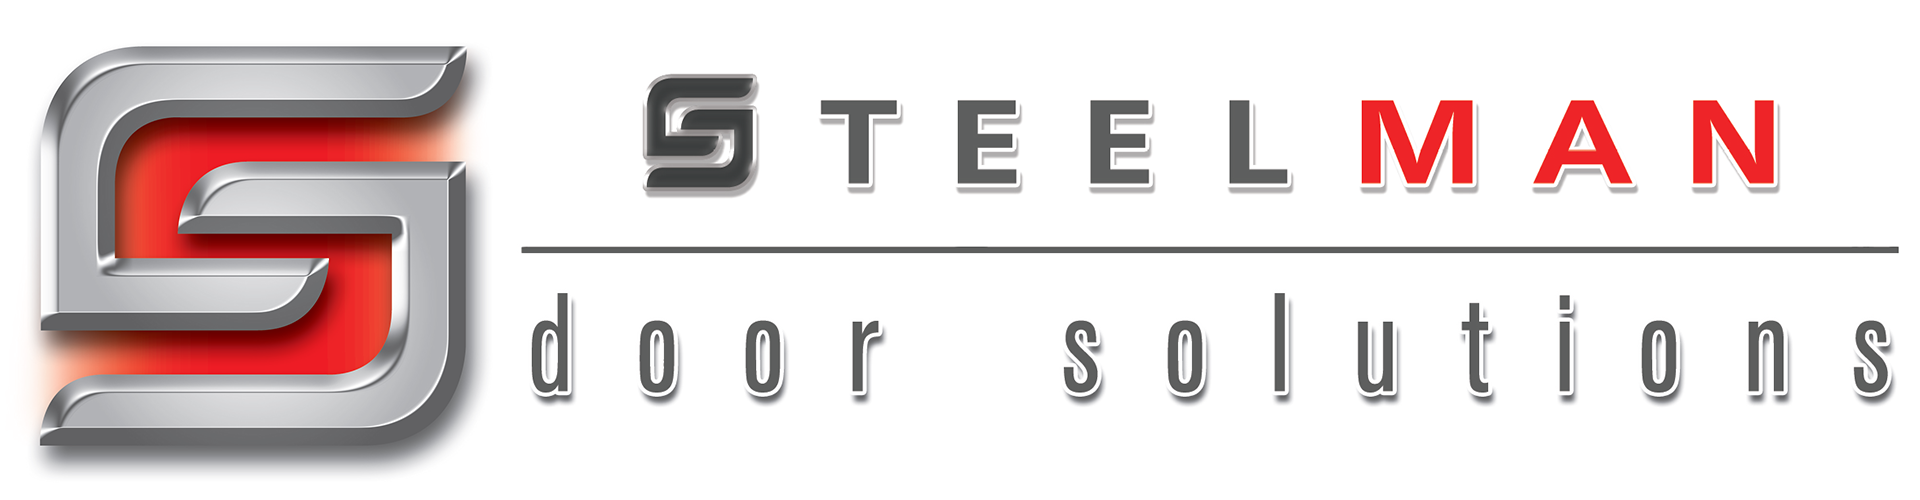 Steelman logo